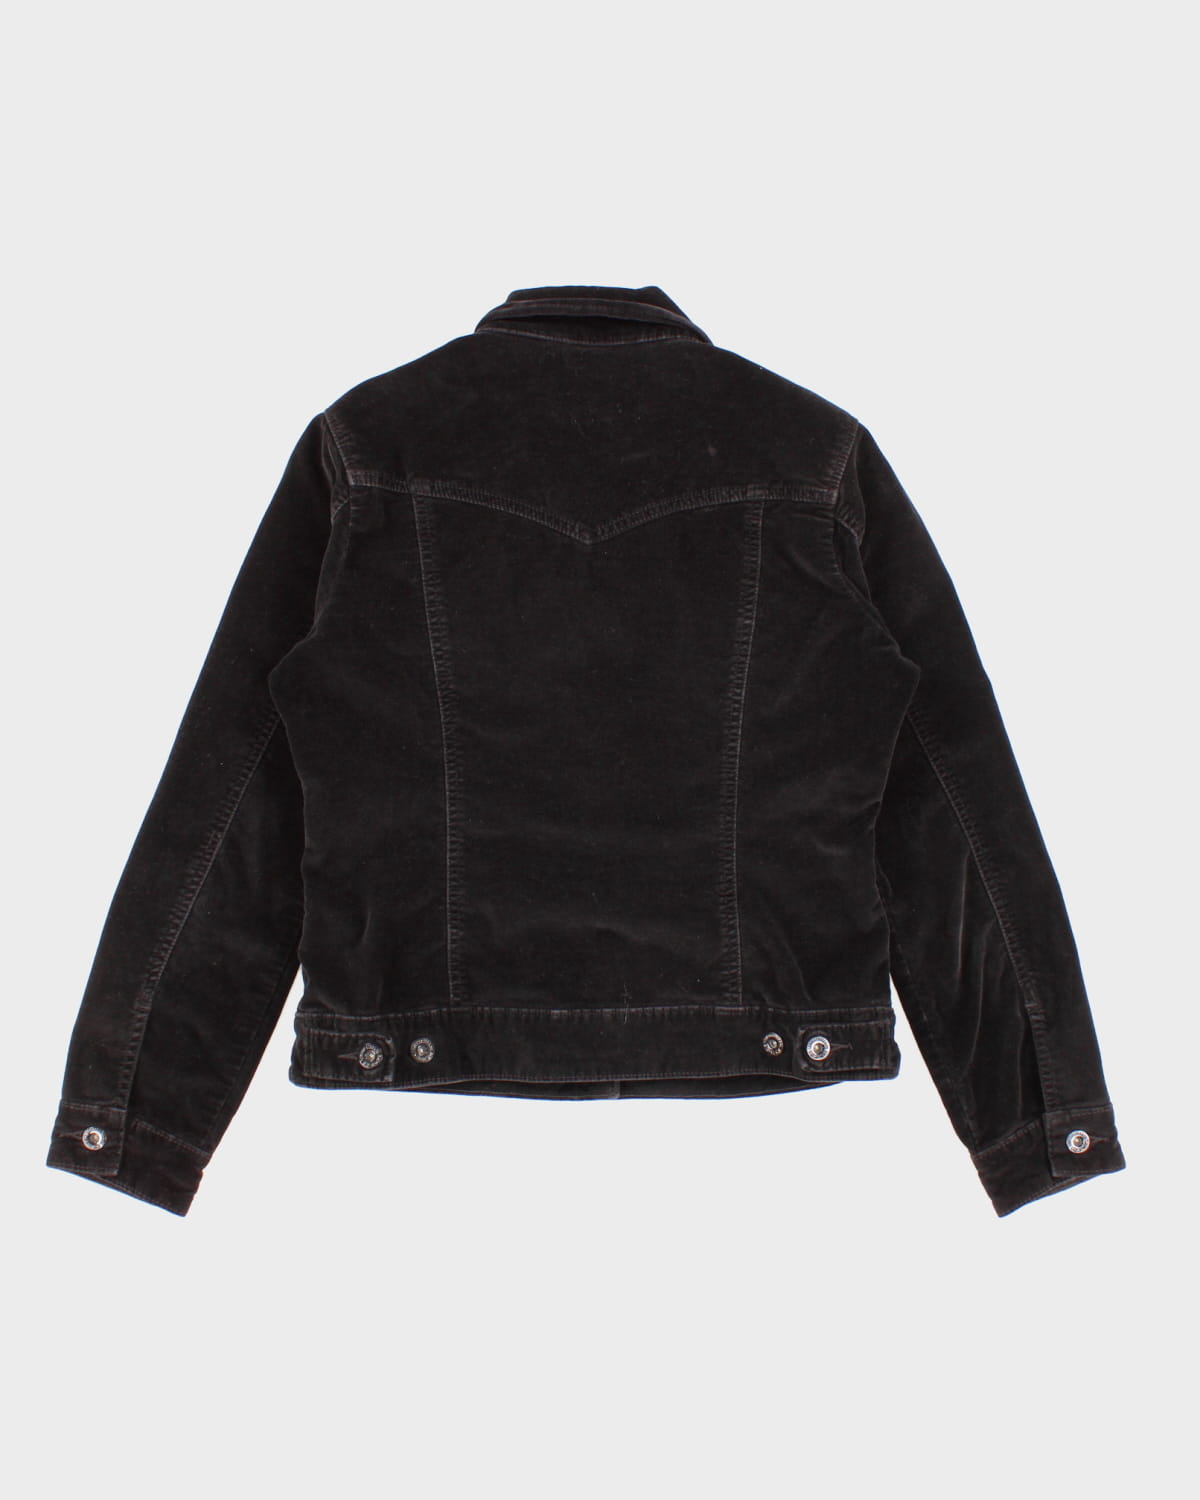 Black Velour Levi's Jacket - S